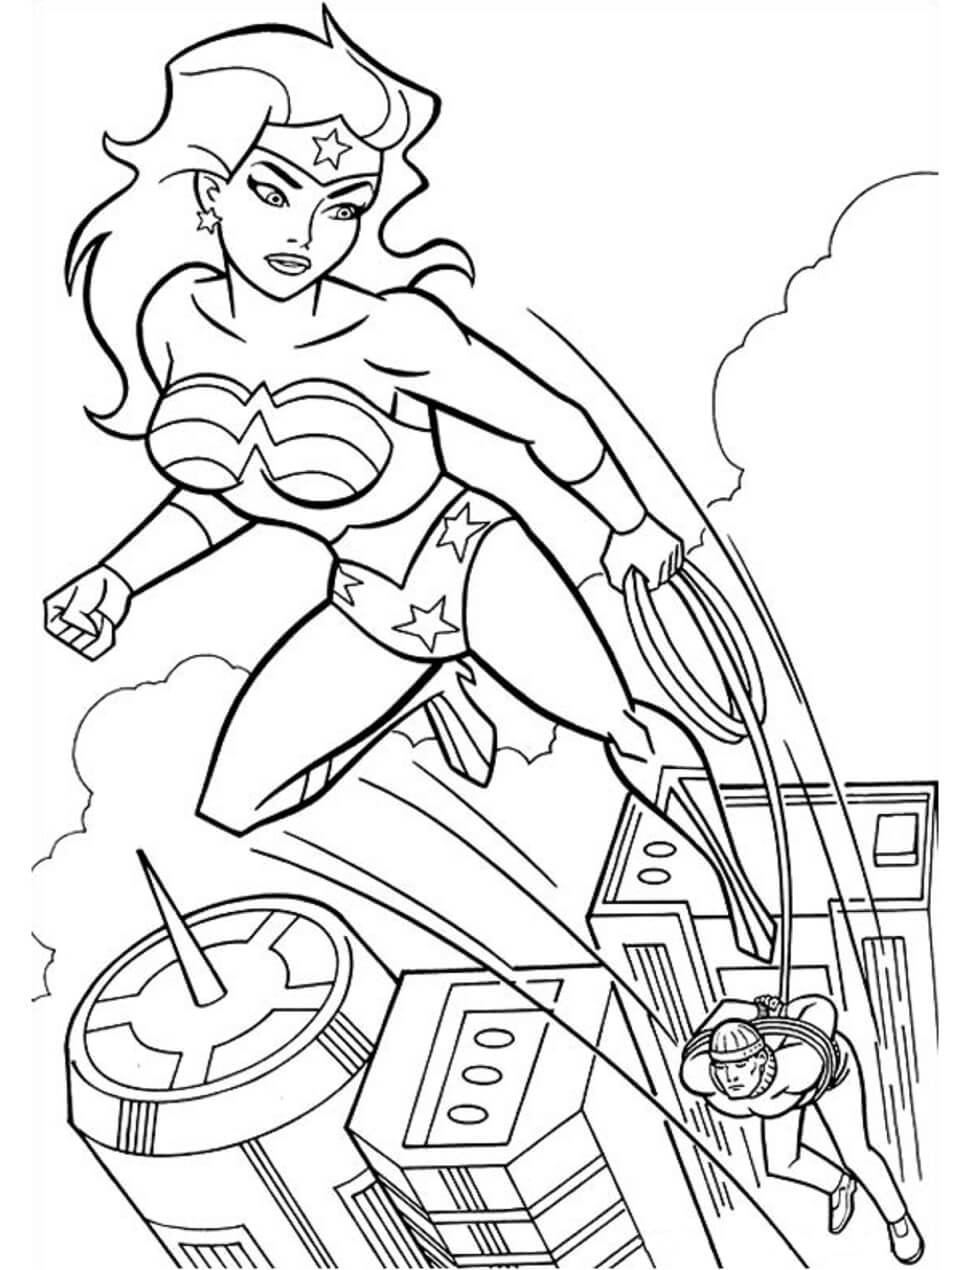 Wonder Woman Prender um Criminoso para colorir